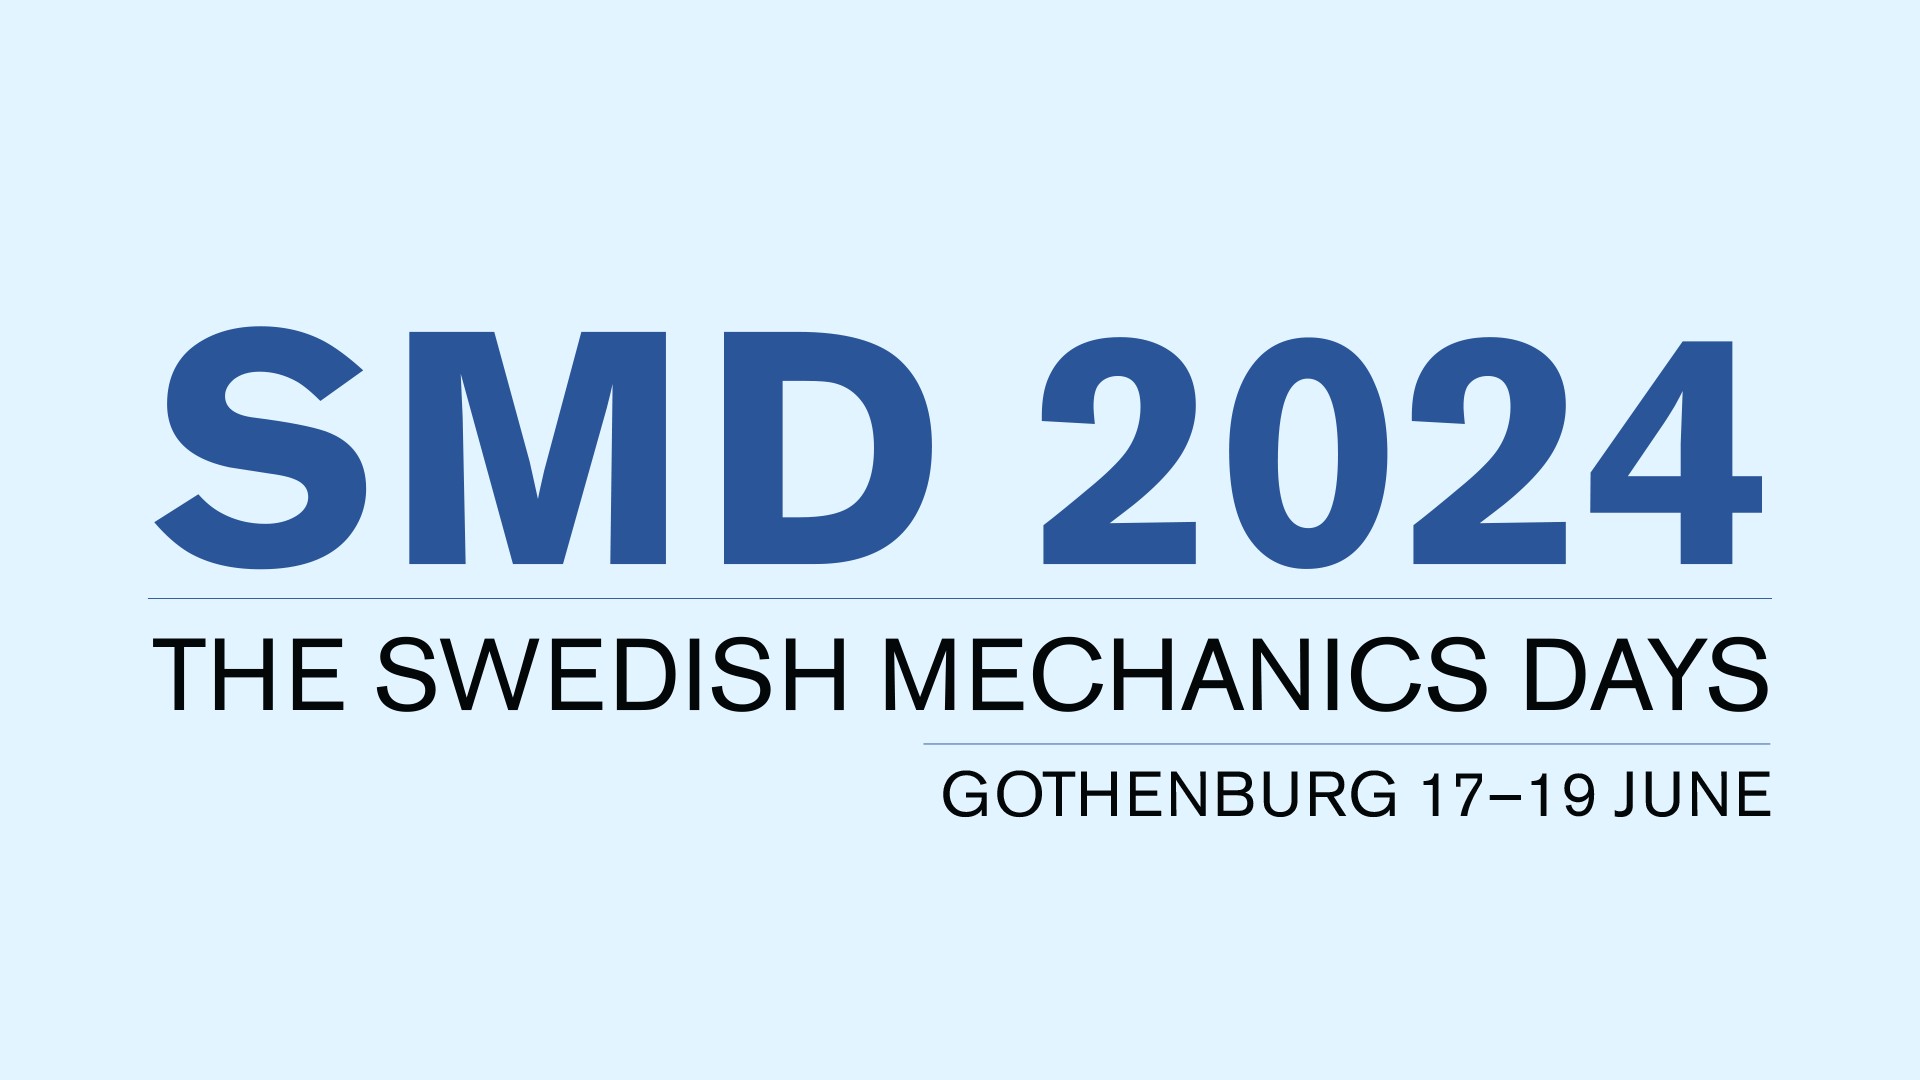 The conference logotype of the Swedish Mechanics Days 2024.